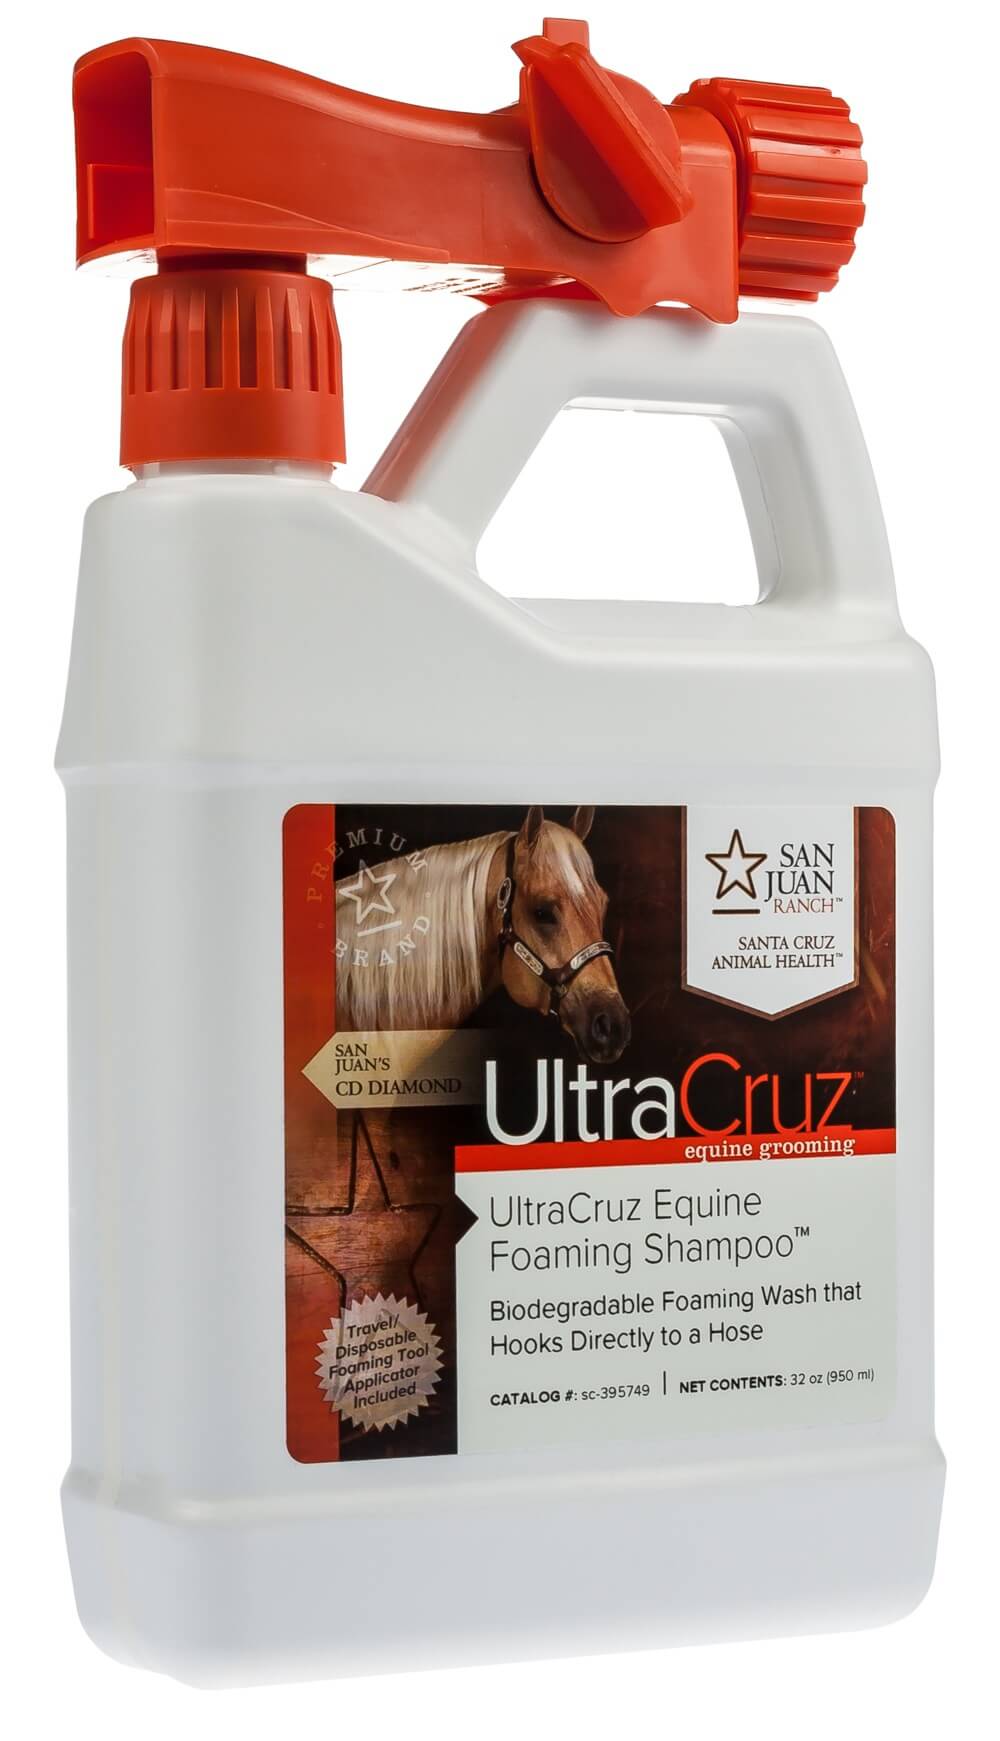 Ultra Cruz Equine Foaming Shampoo